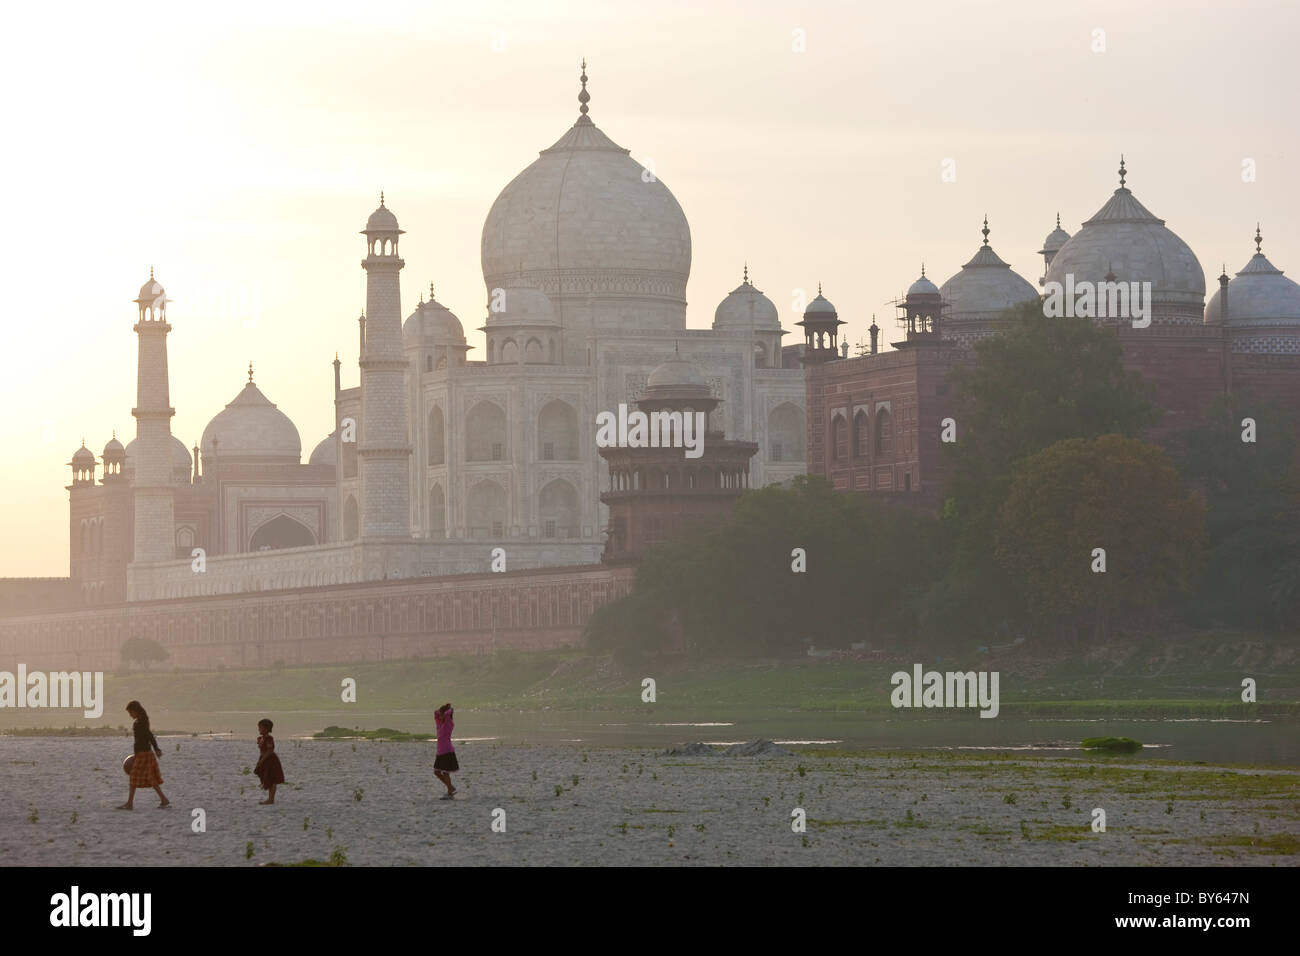 Taj Mahal am Ufer des Flusses Yamuna, Agra, Indien Stockfoto